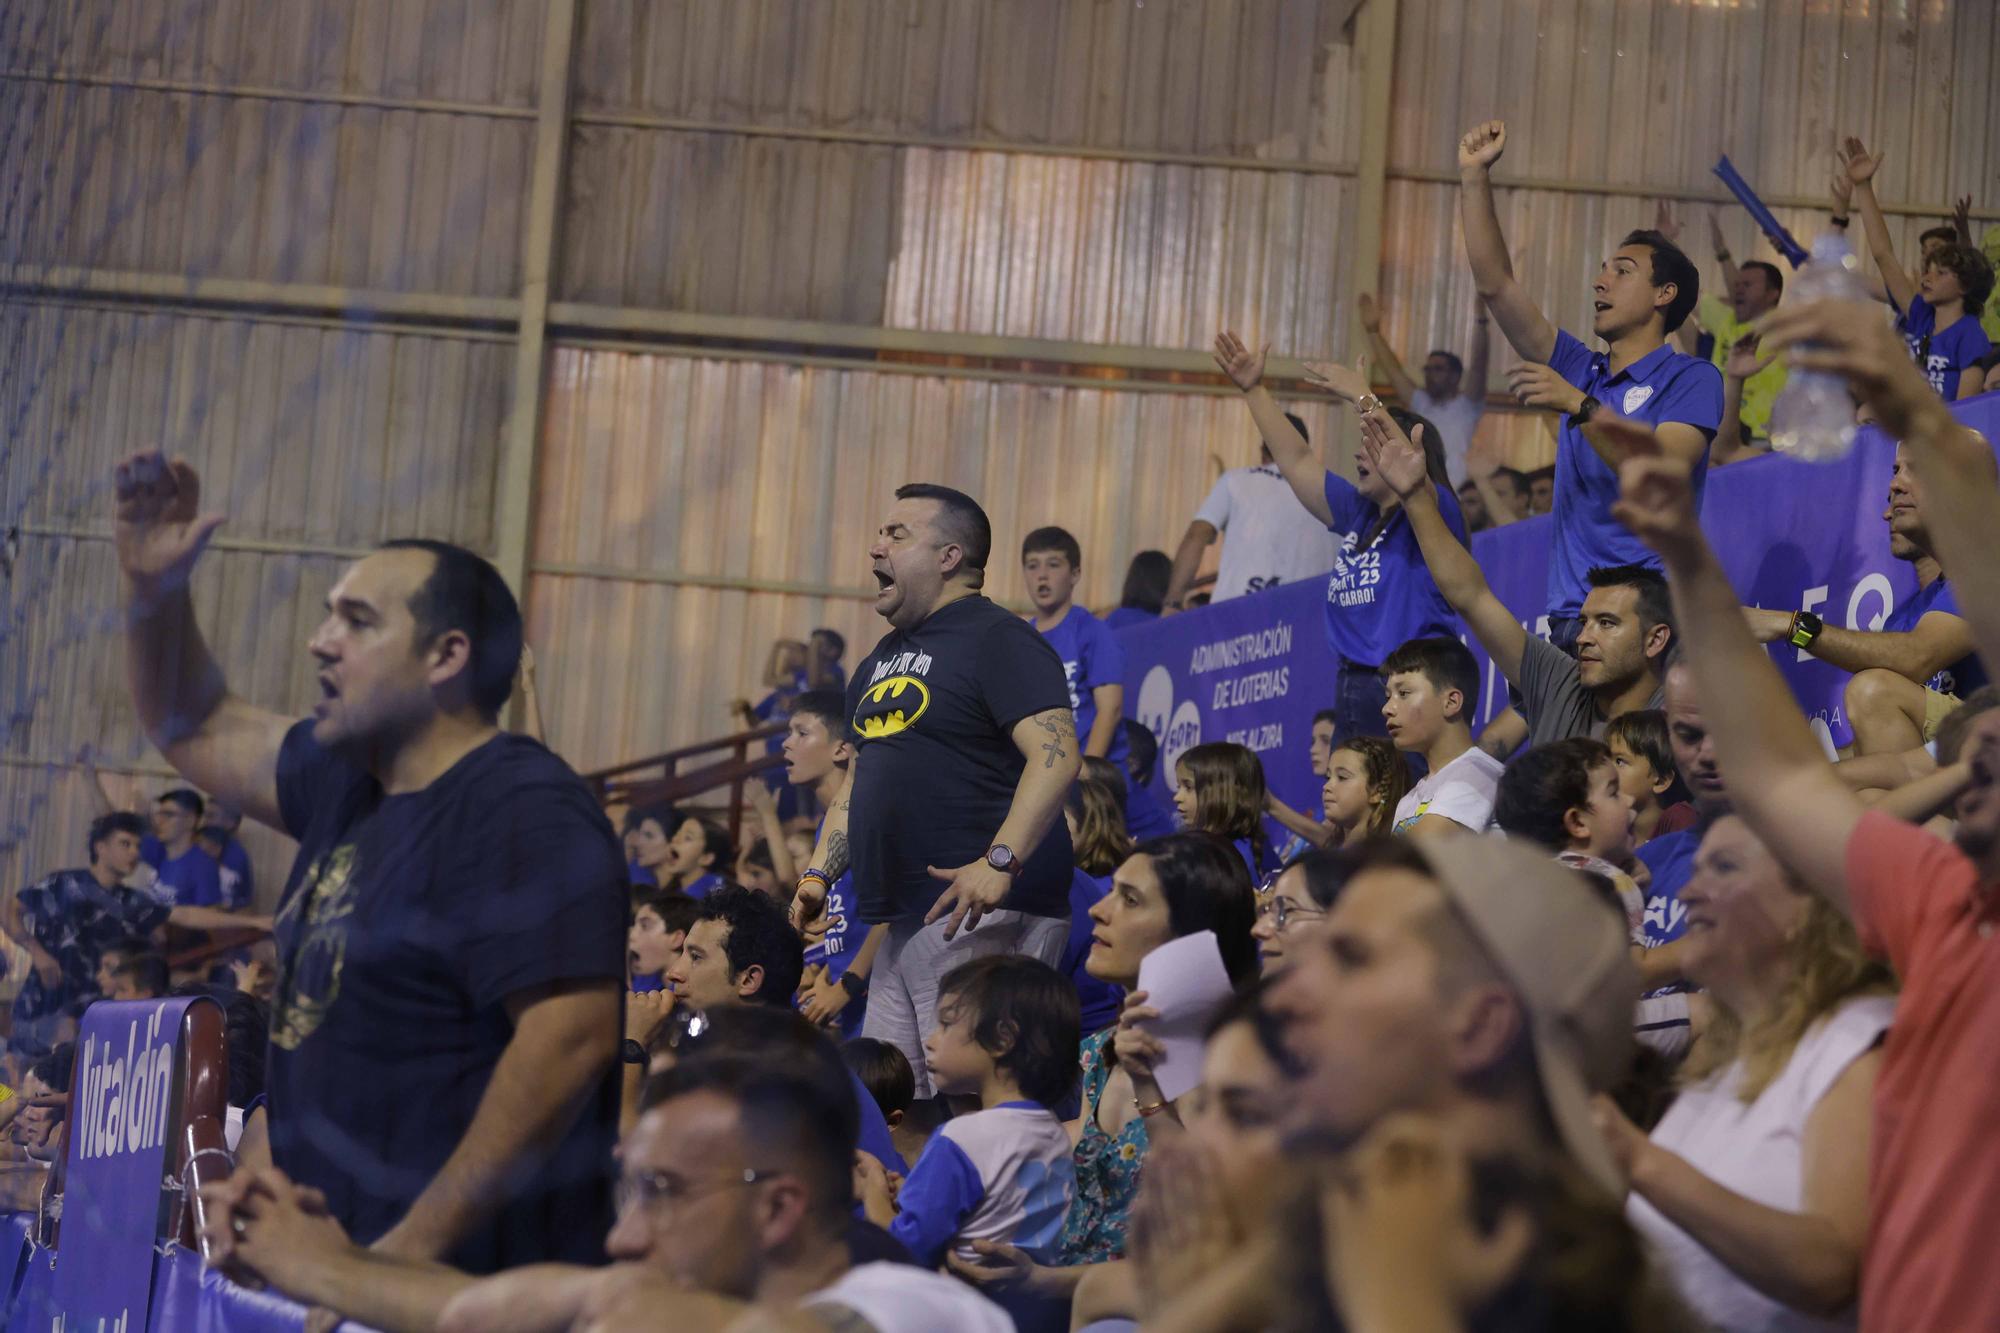 Partido de ascenso a primera entre el Alzira y Burela FS de fúbol sala